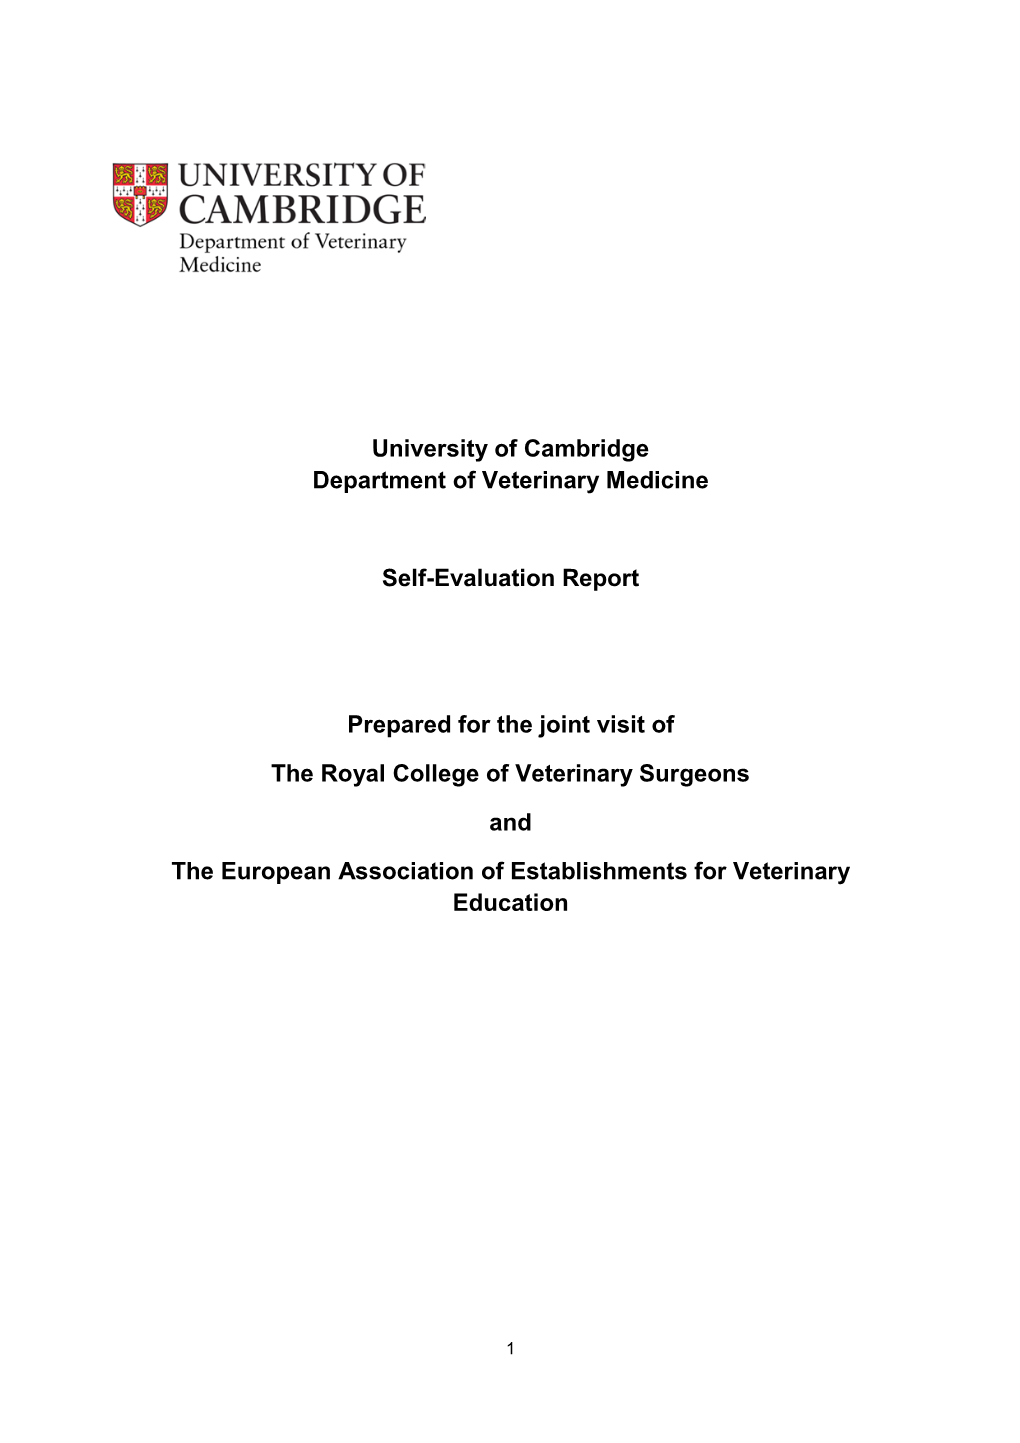 University of Cambridge Department of Veterinary Medicine Self